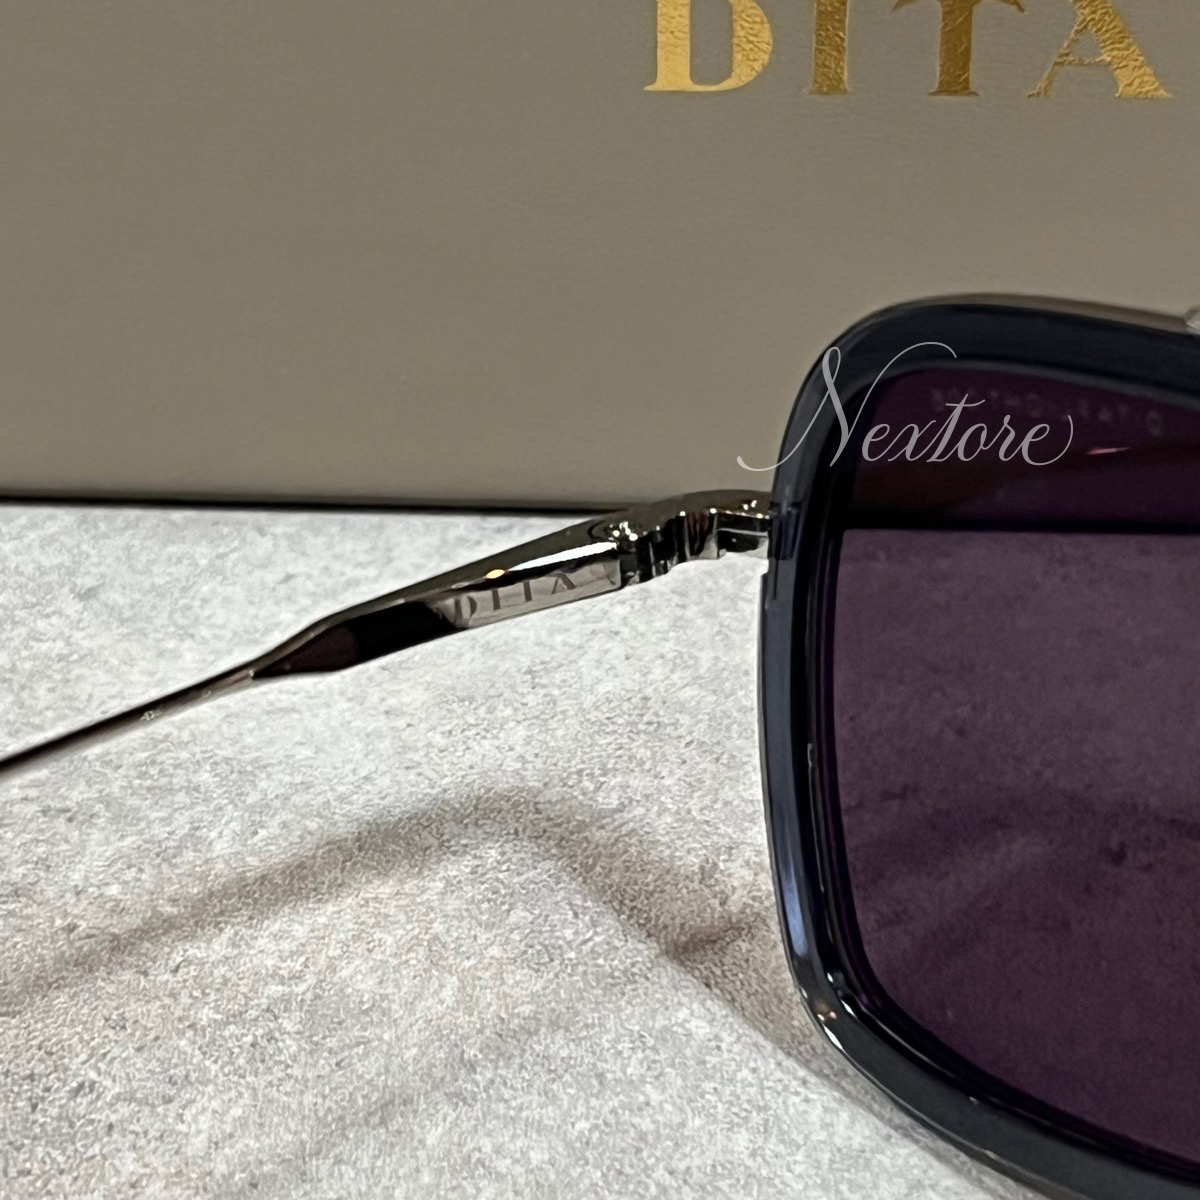 DITA ディータ FLIGHT-006 メガネ メンズ 眼鏡 サングラス 日本製